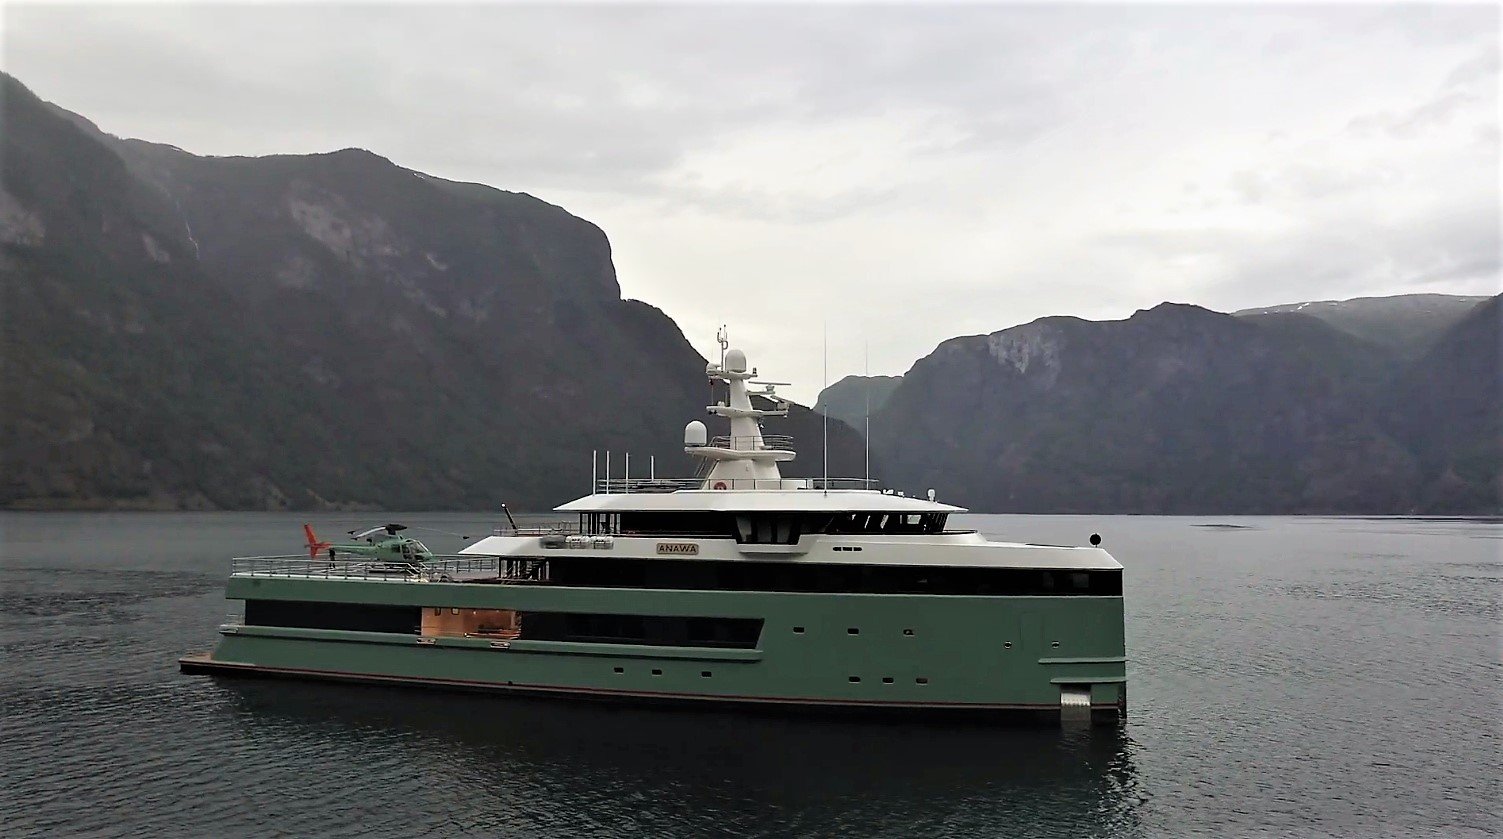 ANAWA Yacht • Jorge Paulo Lemann $100M Superyacht • Damen Yachting • 2020